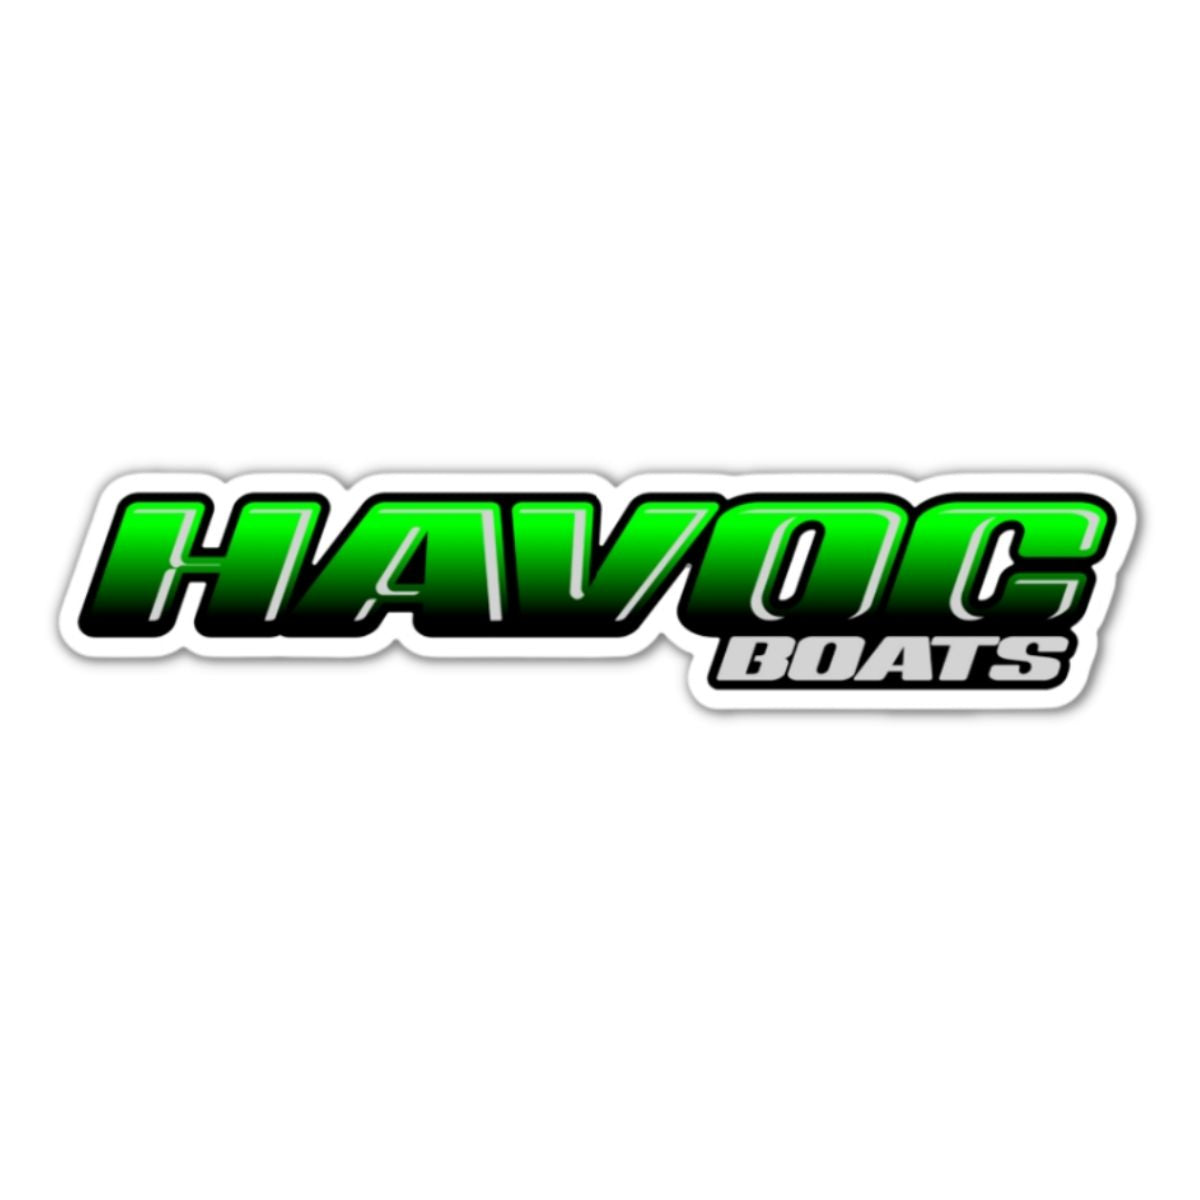 Large Havoc Logo Sticker - 10"